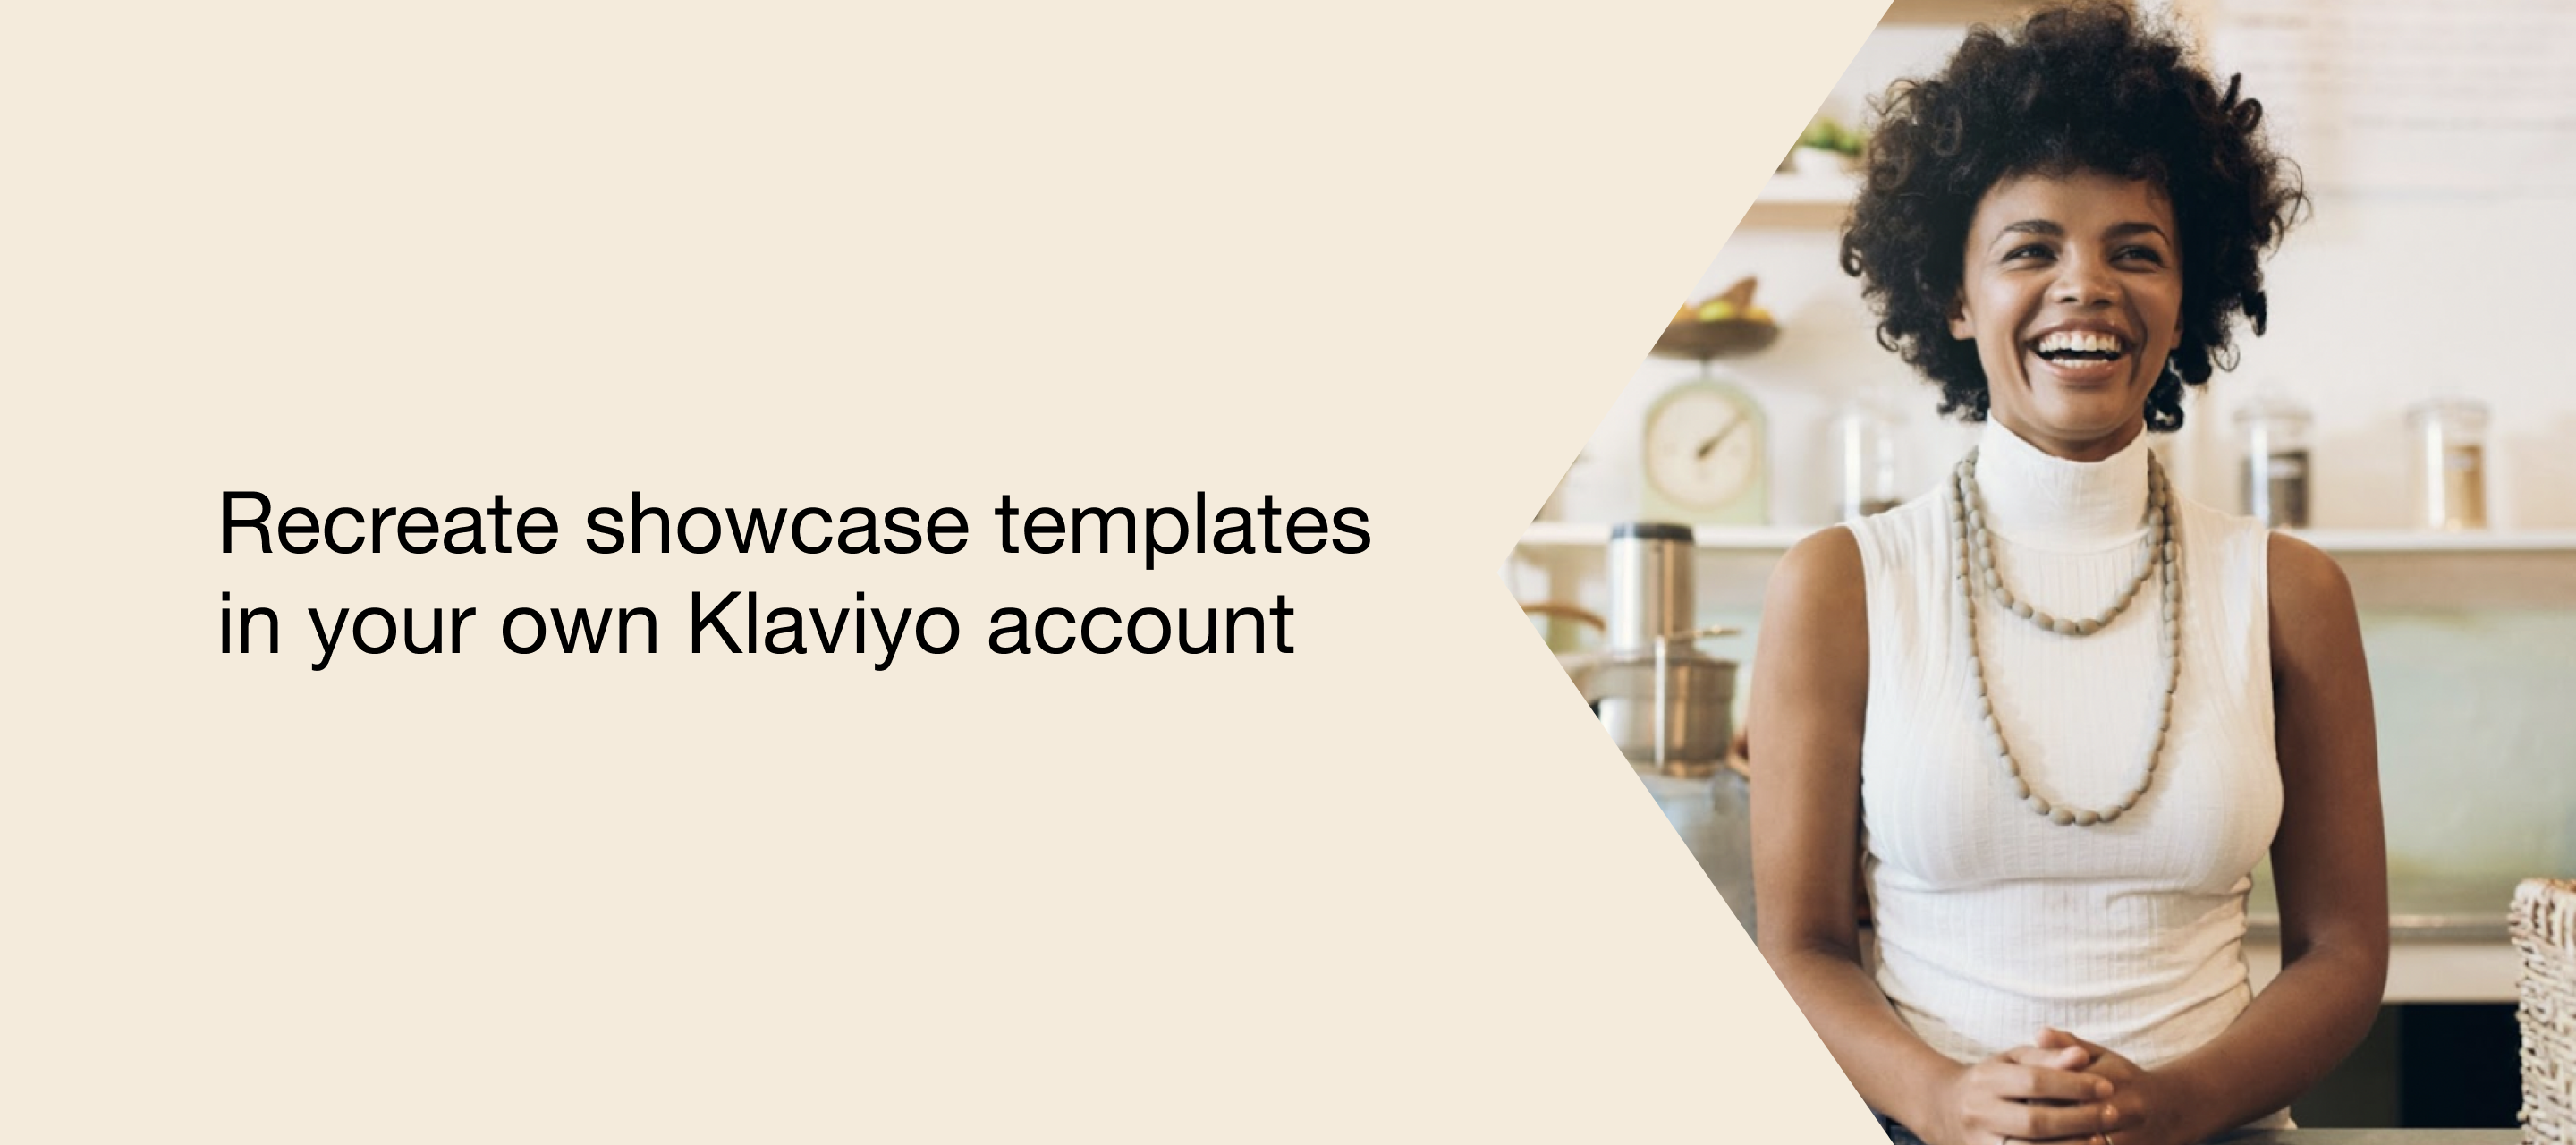 Recreate showcase templates in your own Klaviyo account